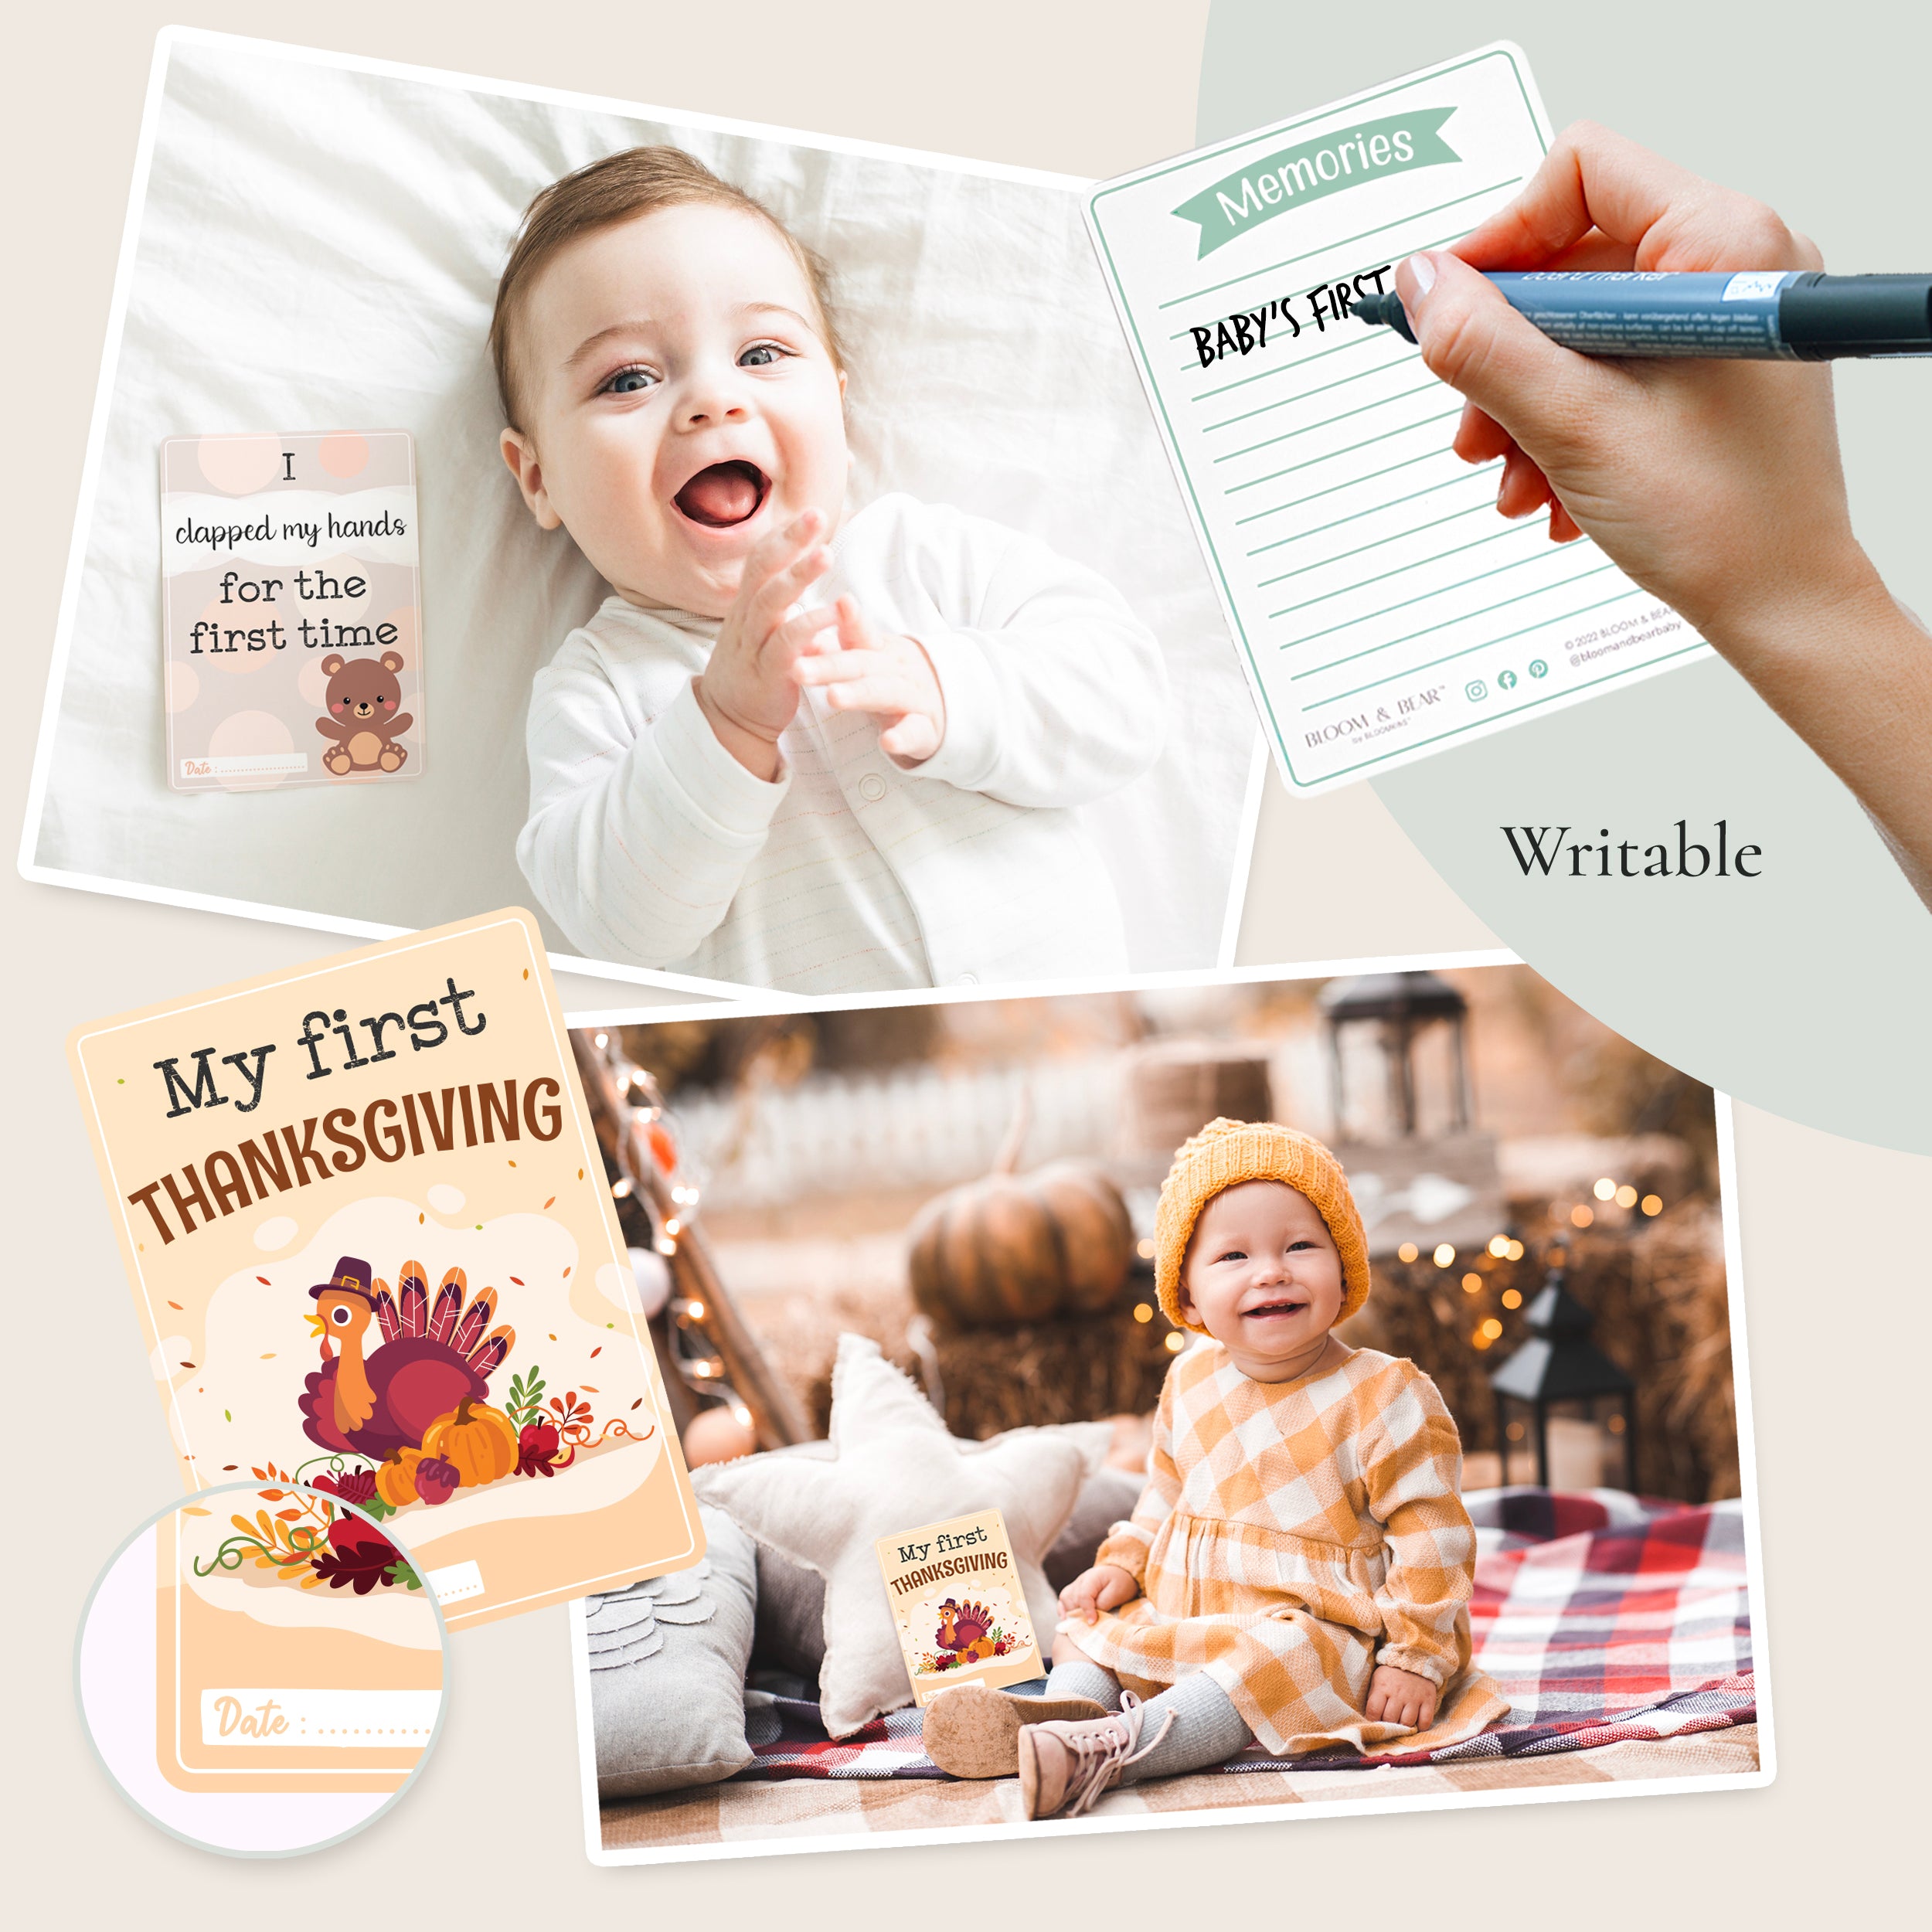 Monthly Baby Milestone Blanket and Milestone Card Set